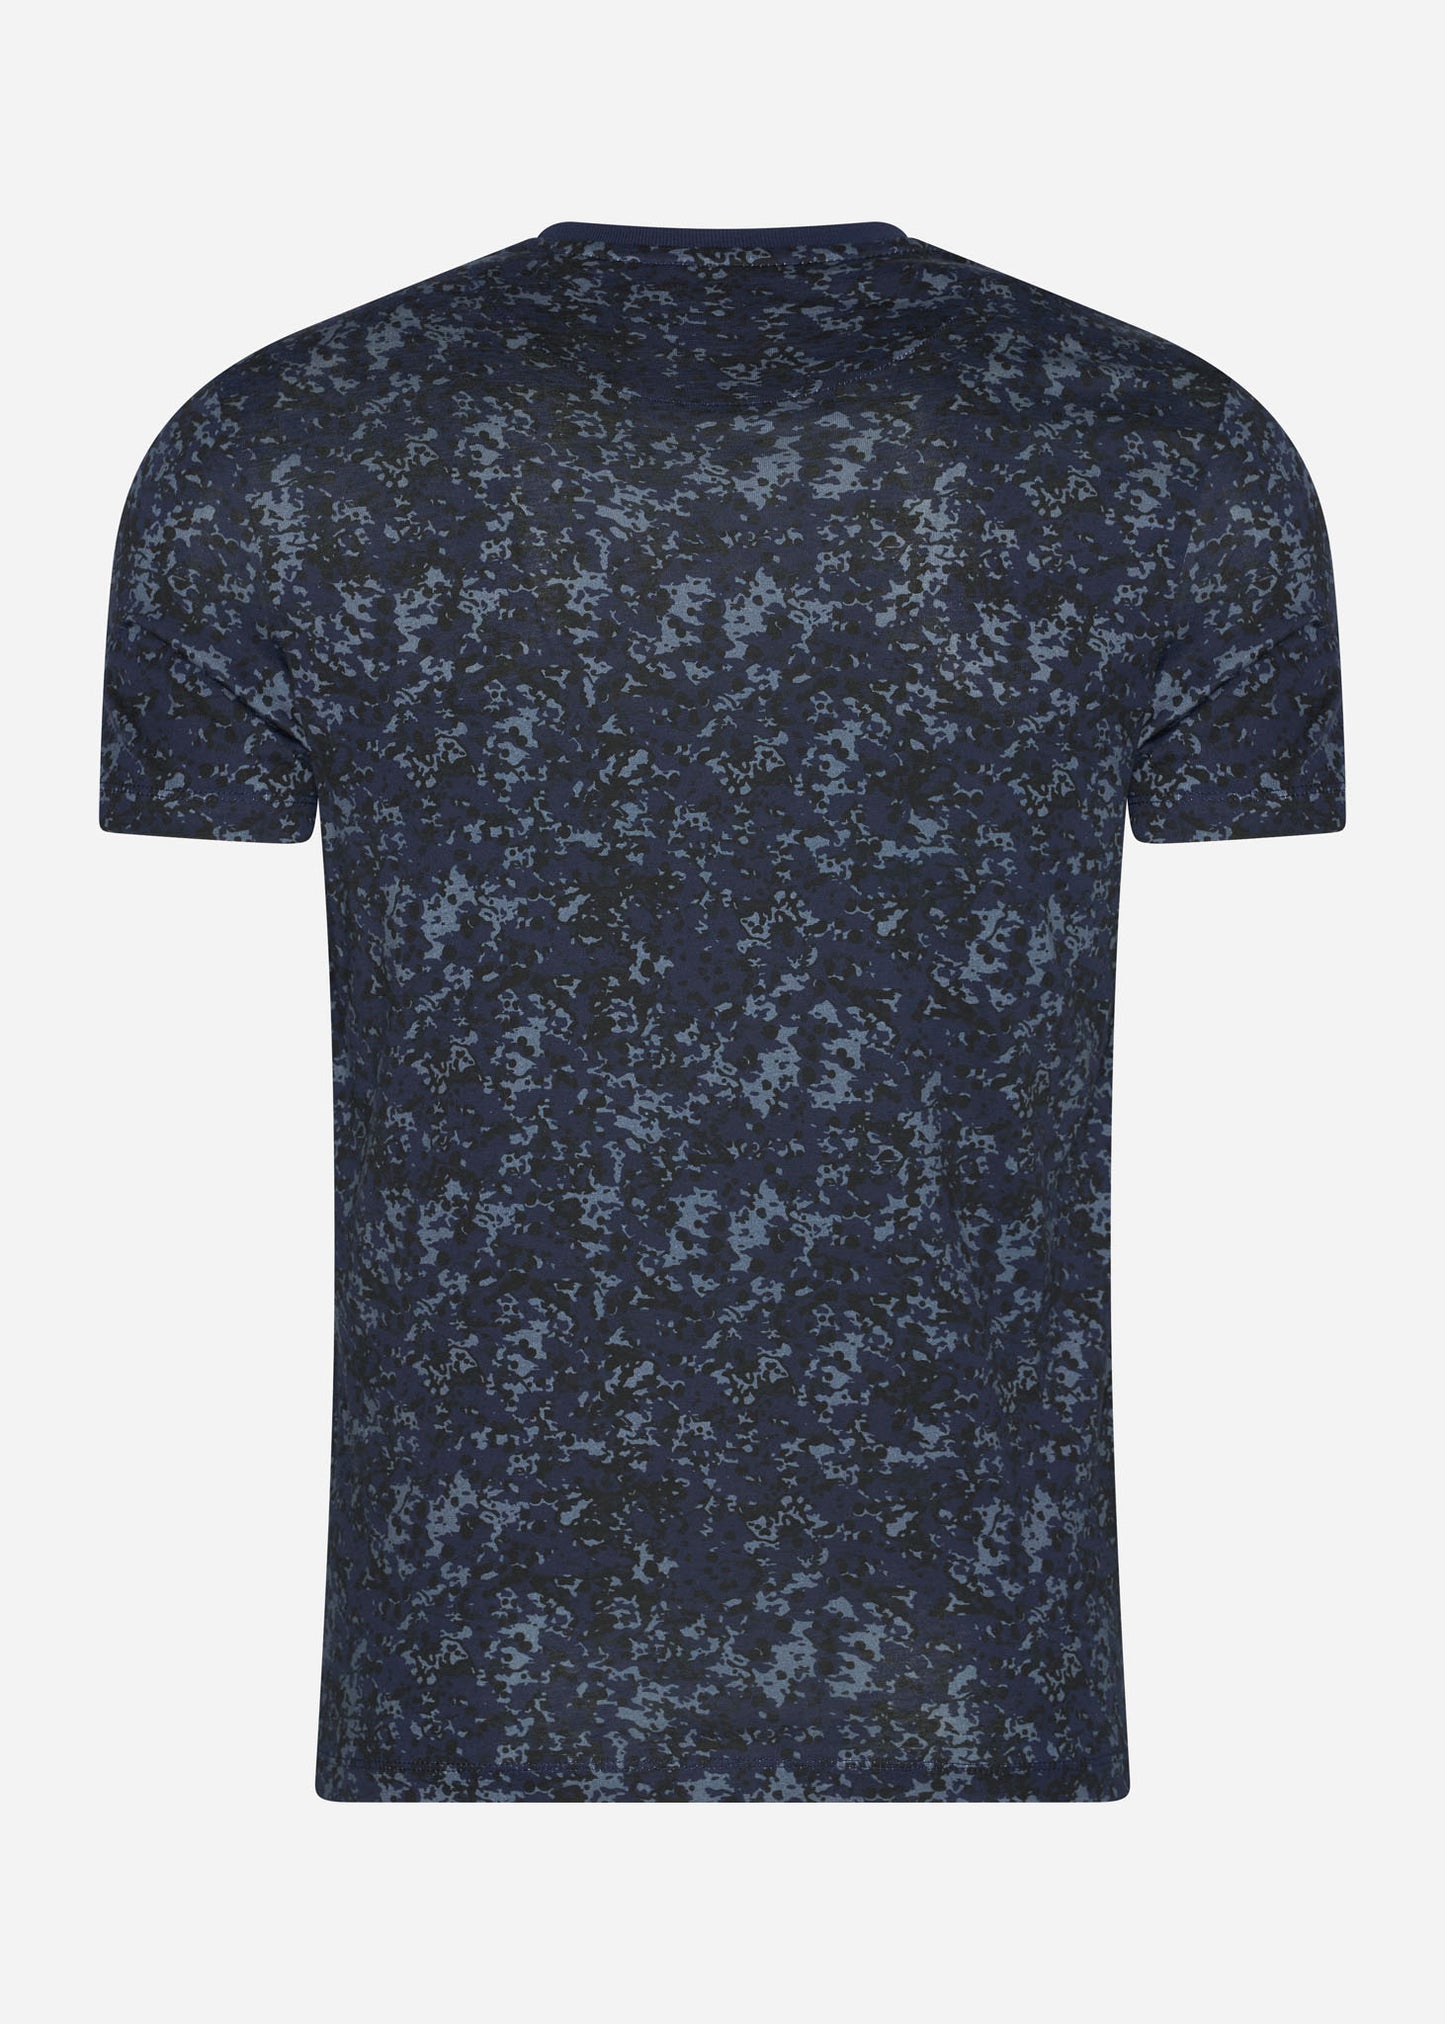 Earth print t-shirt - dark navy